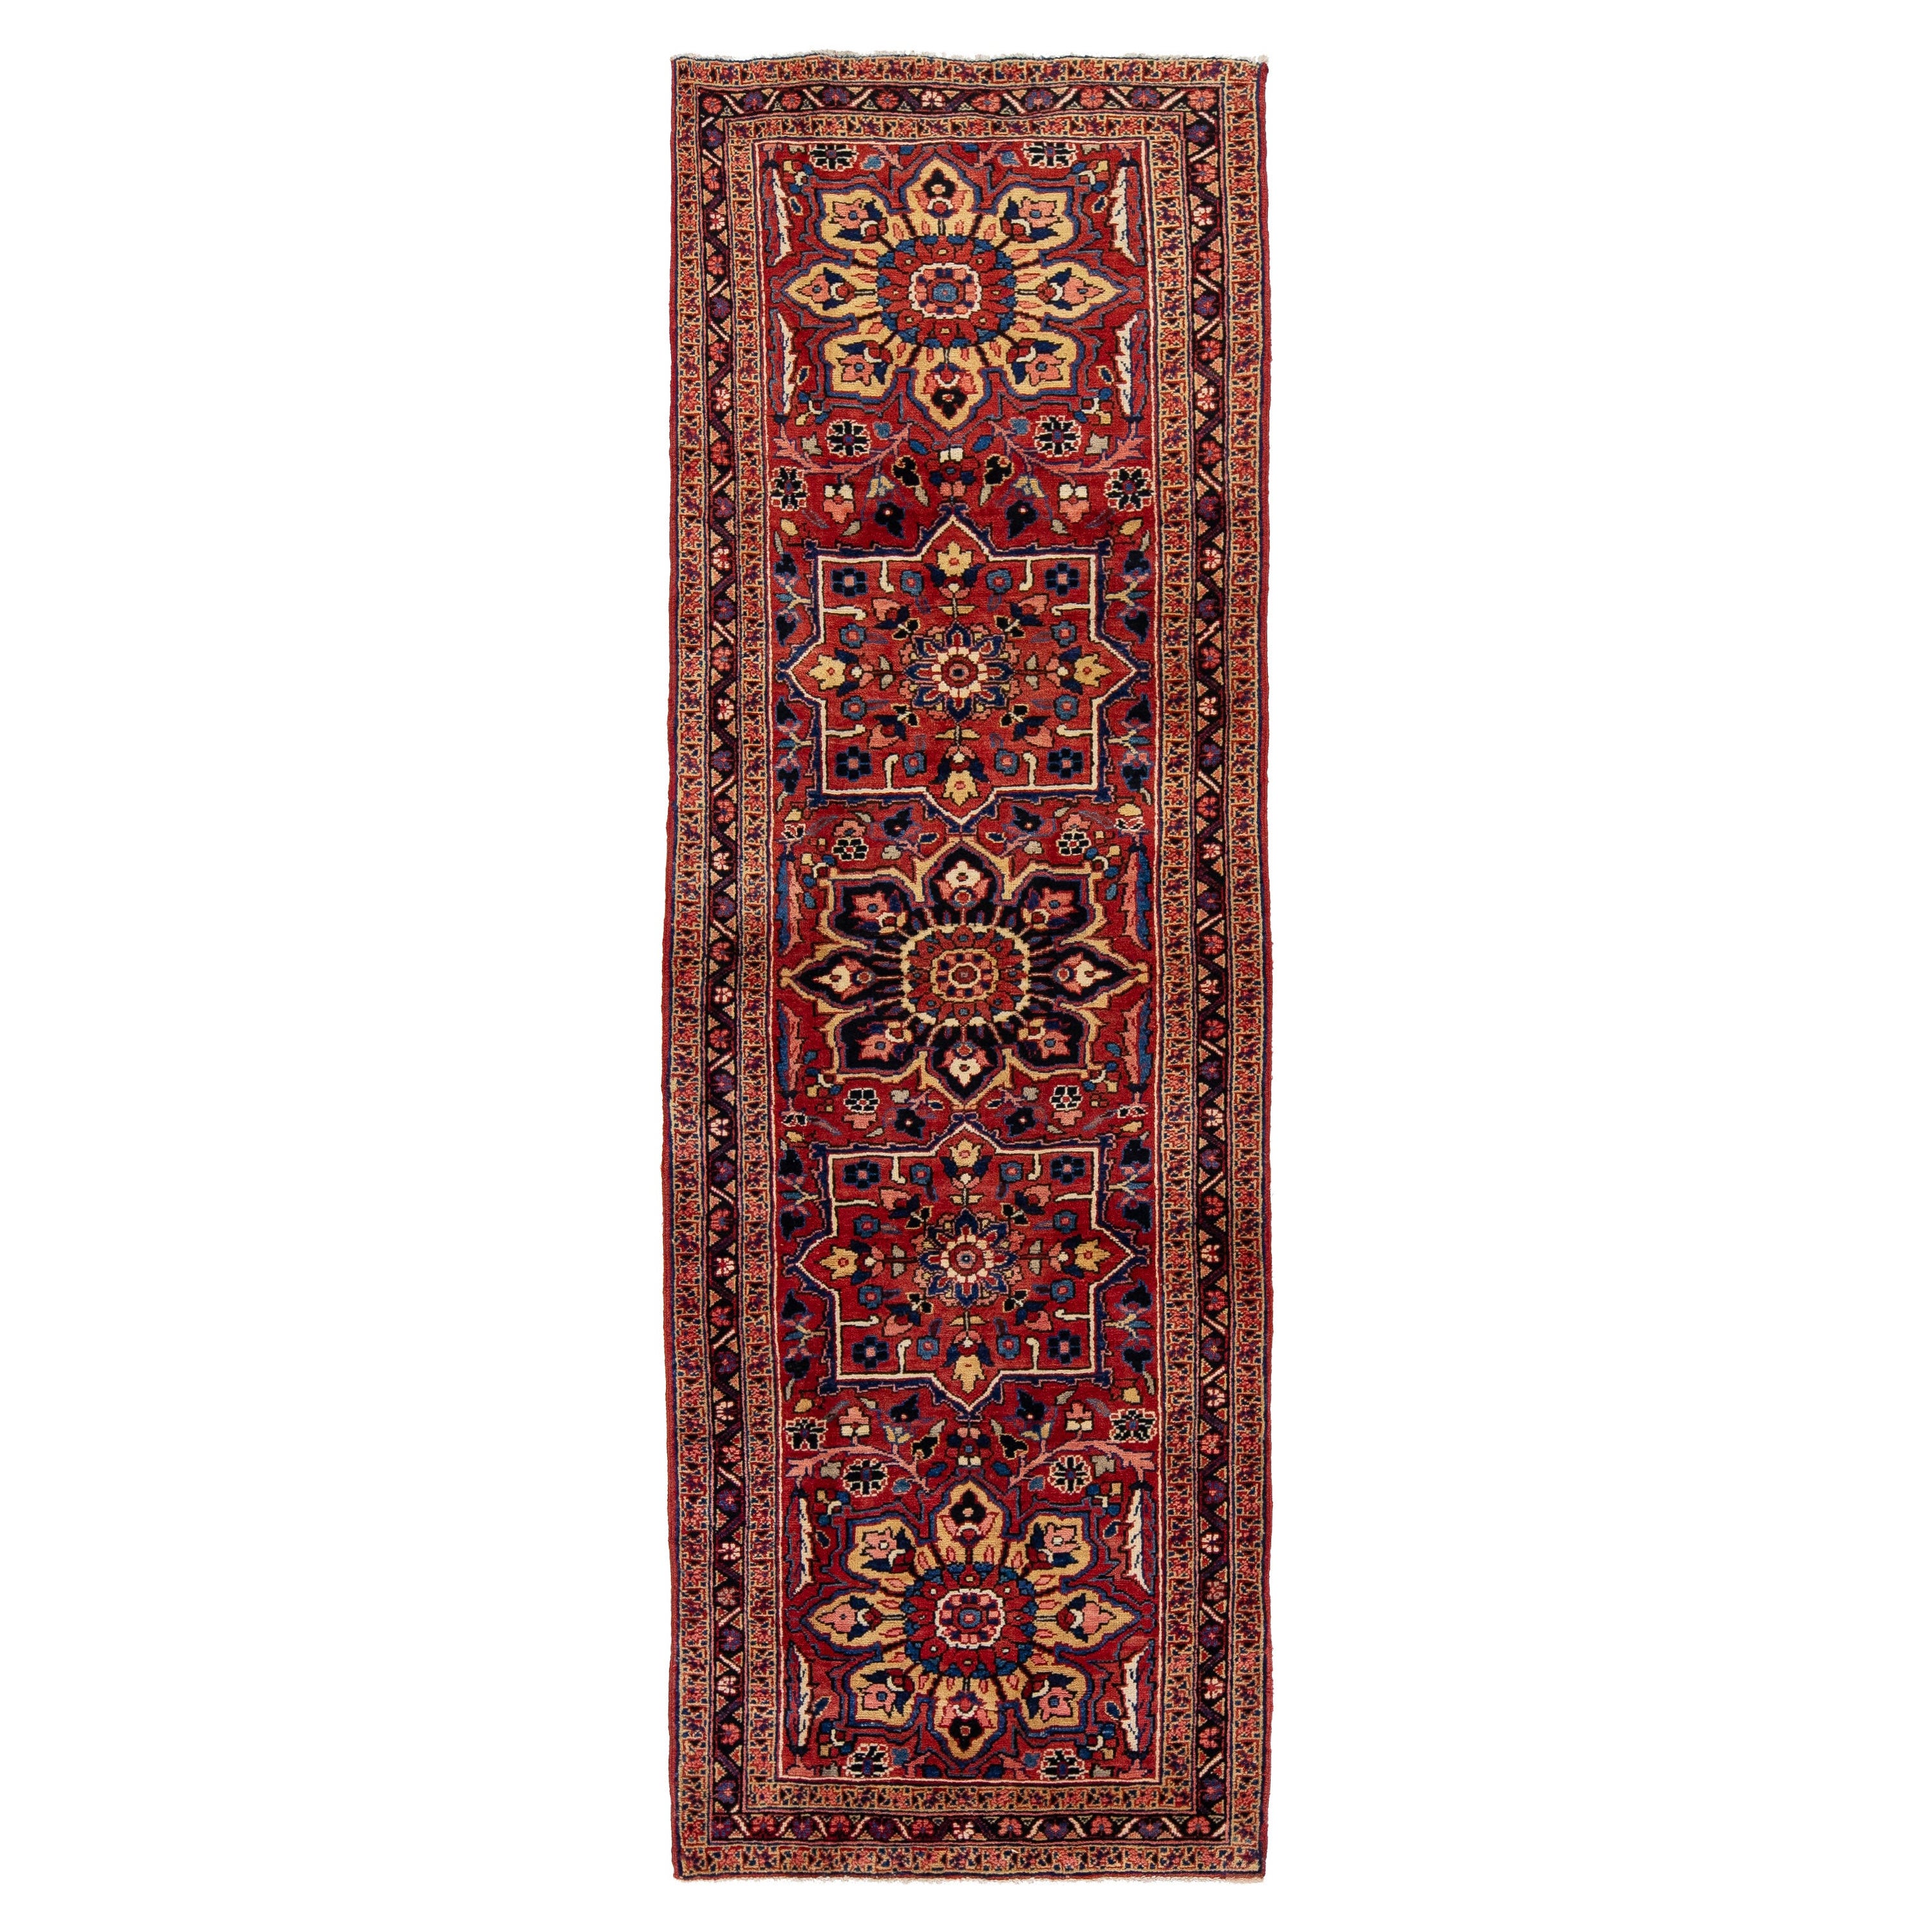 Antique Tribal Persian Heriz Handmade Red Wool Rug